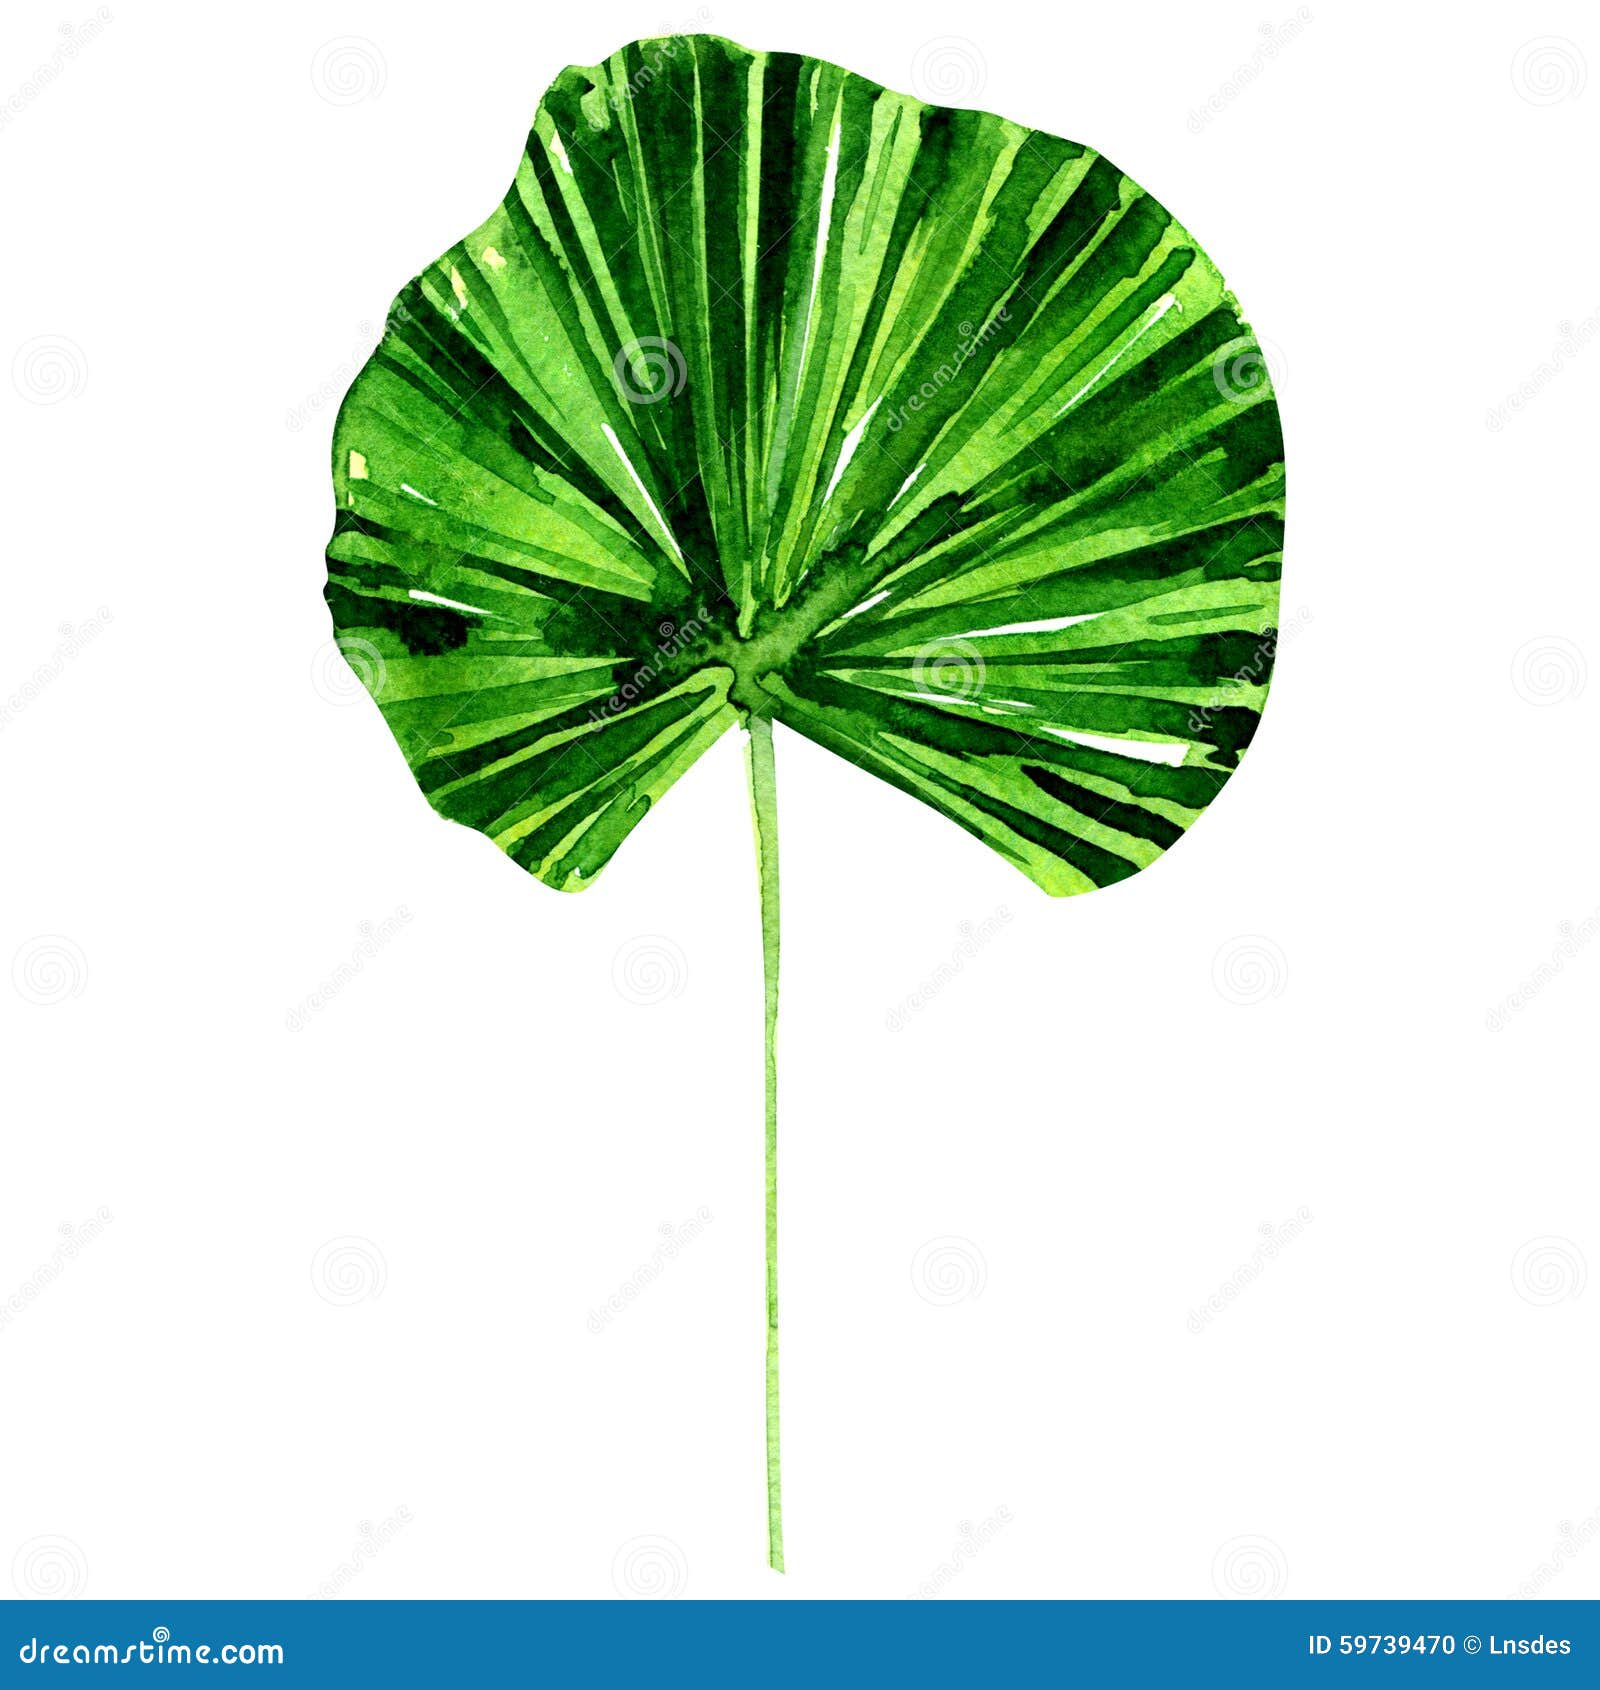 clip art lotus leaf - photo #7